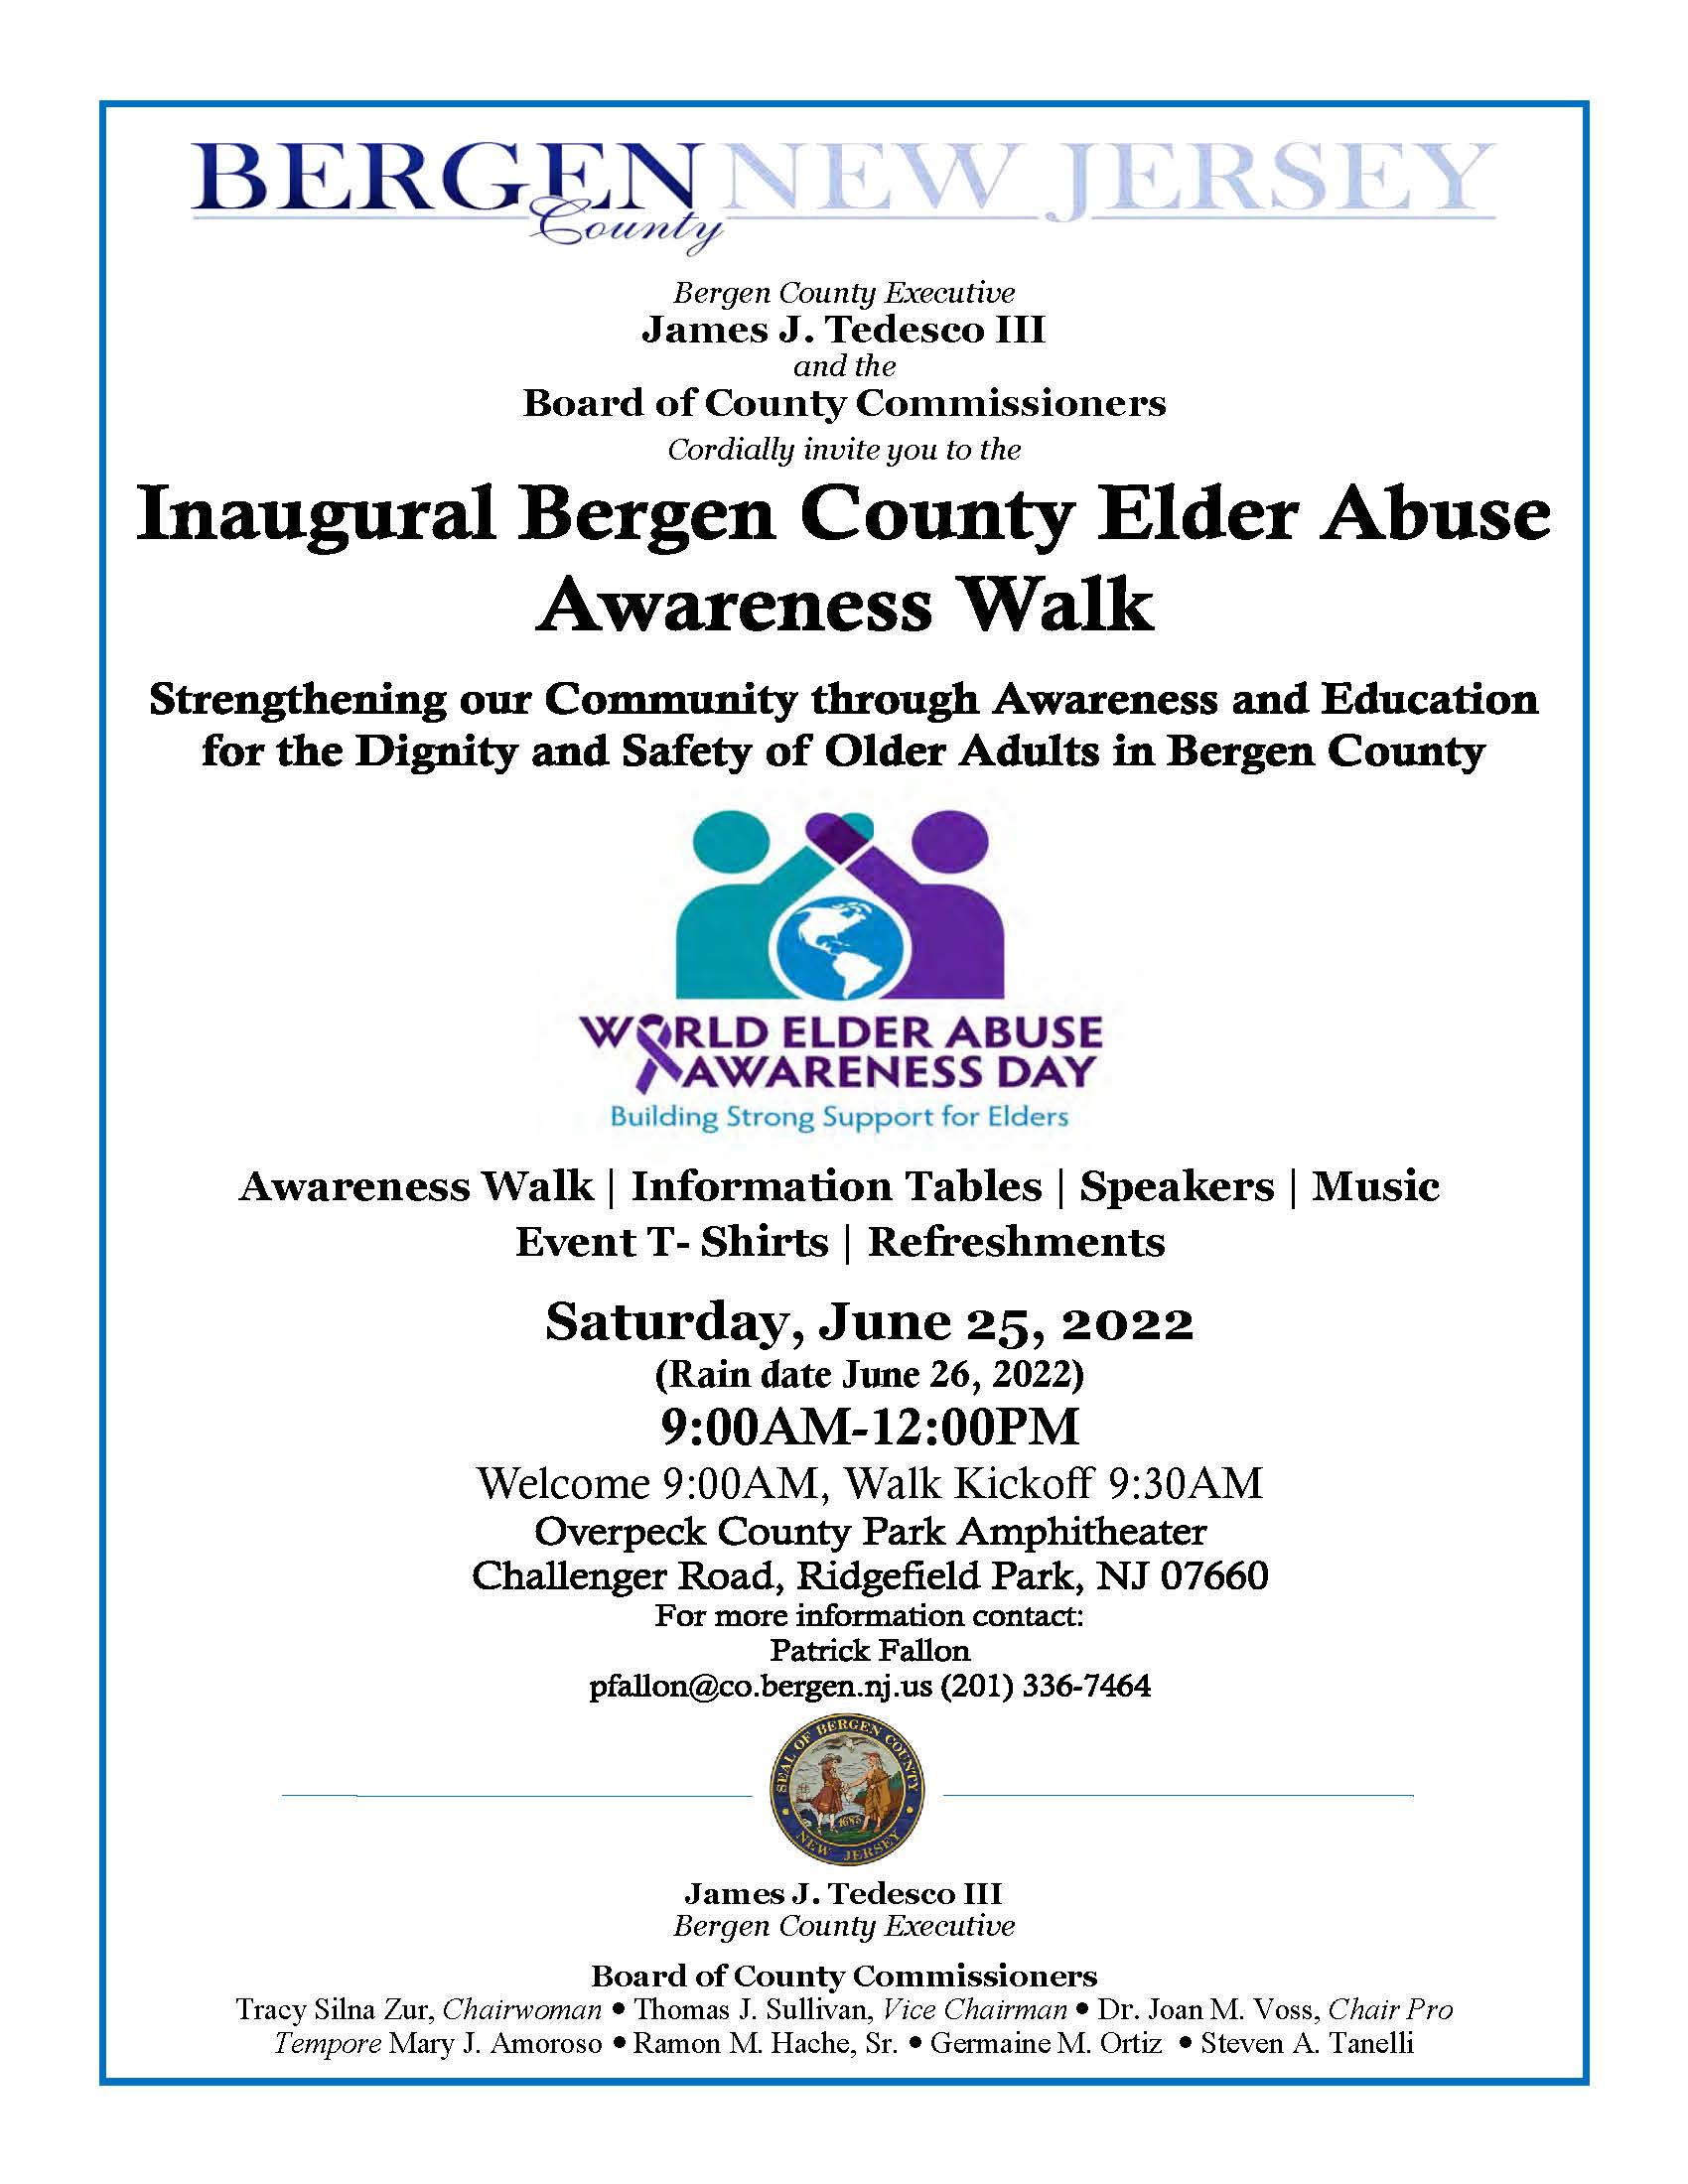 Elder Abuse Awareness Walk Flyer